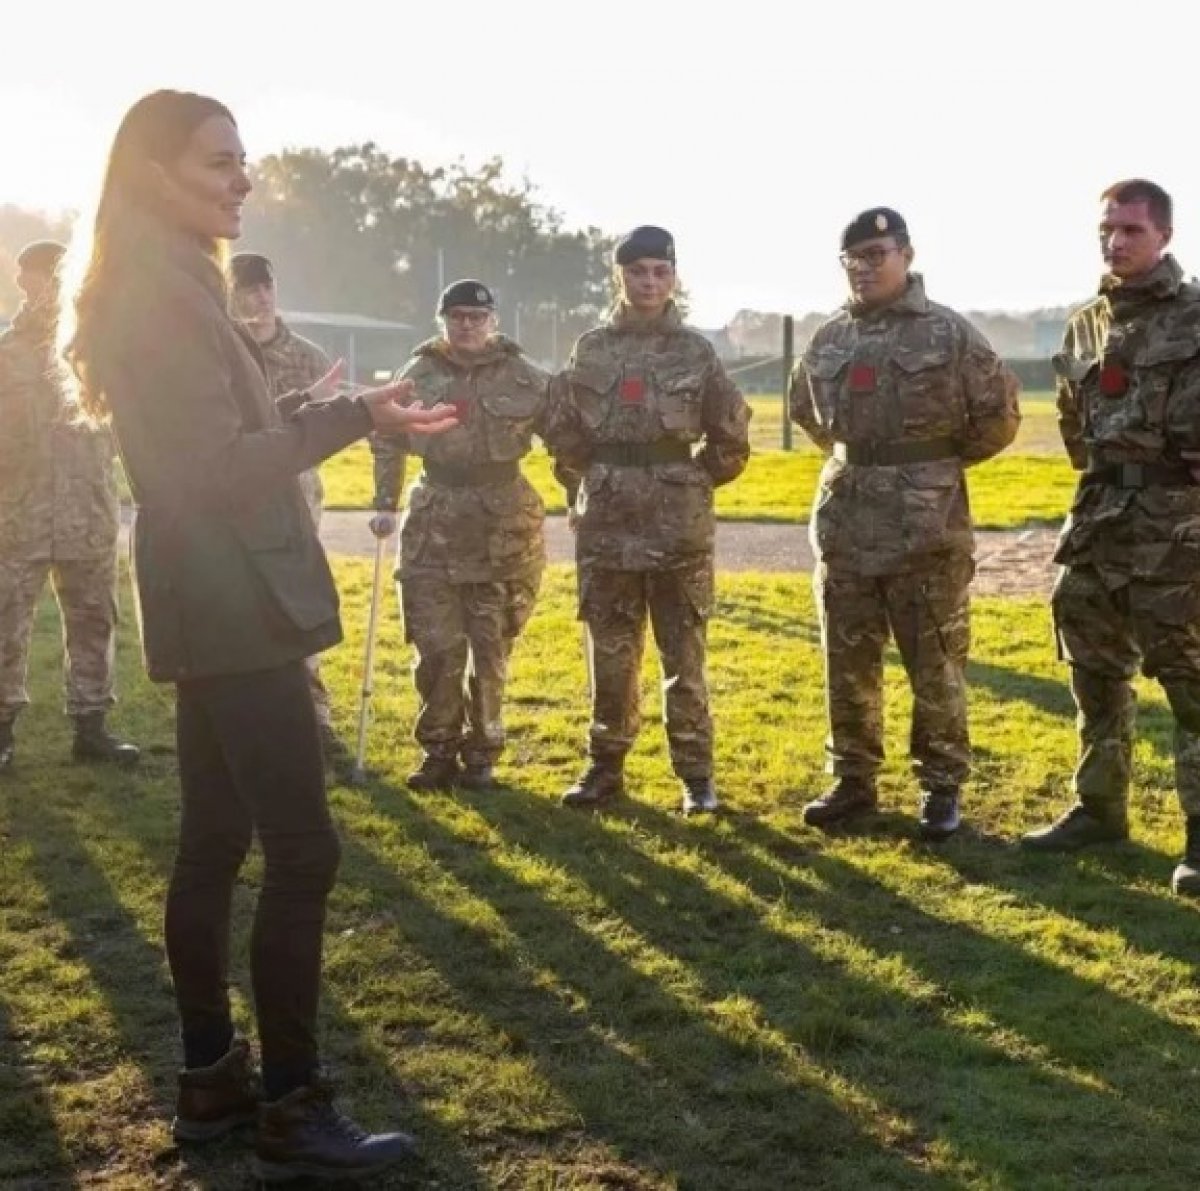 Kate Middleton dan askeri üniformalı tank pozu #5